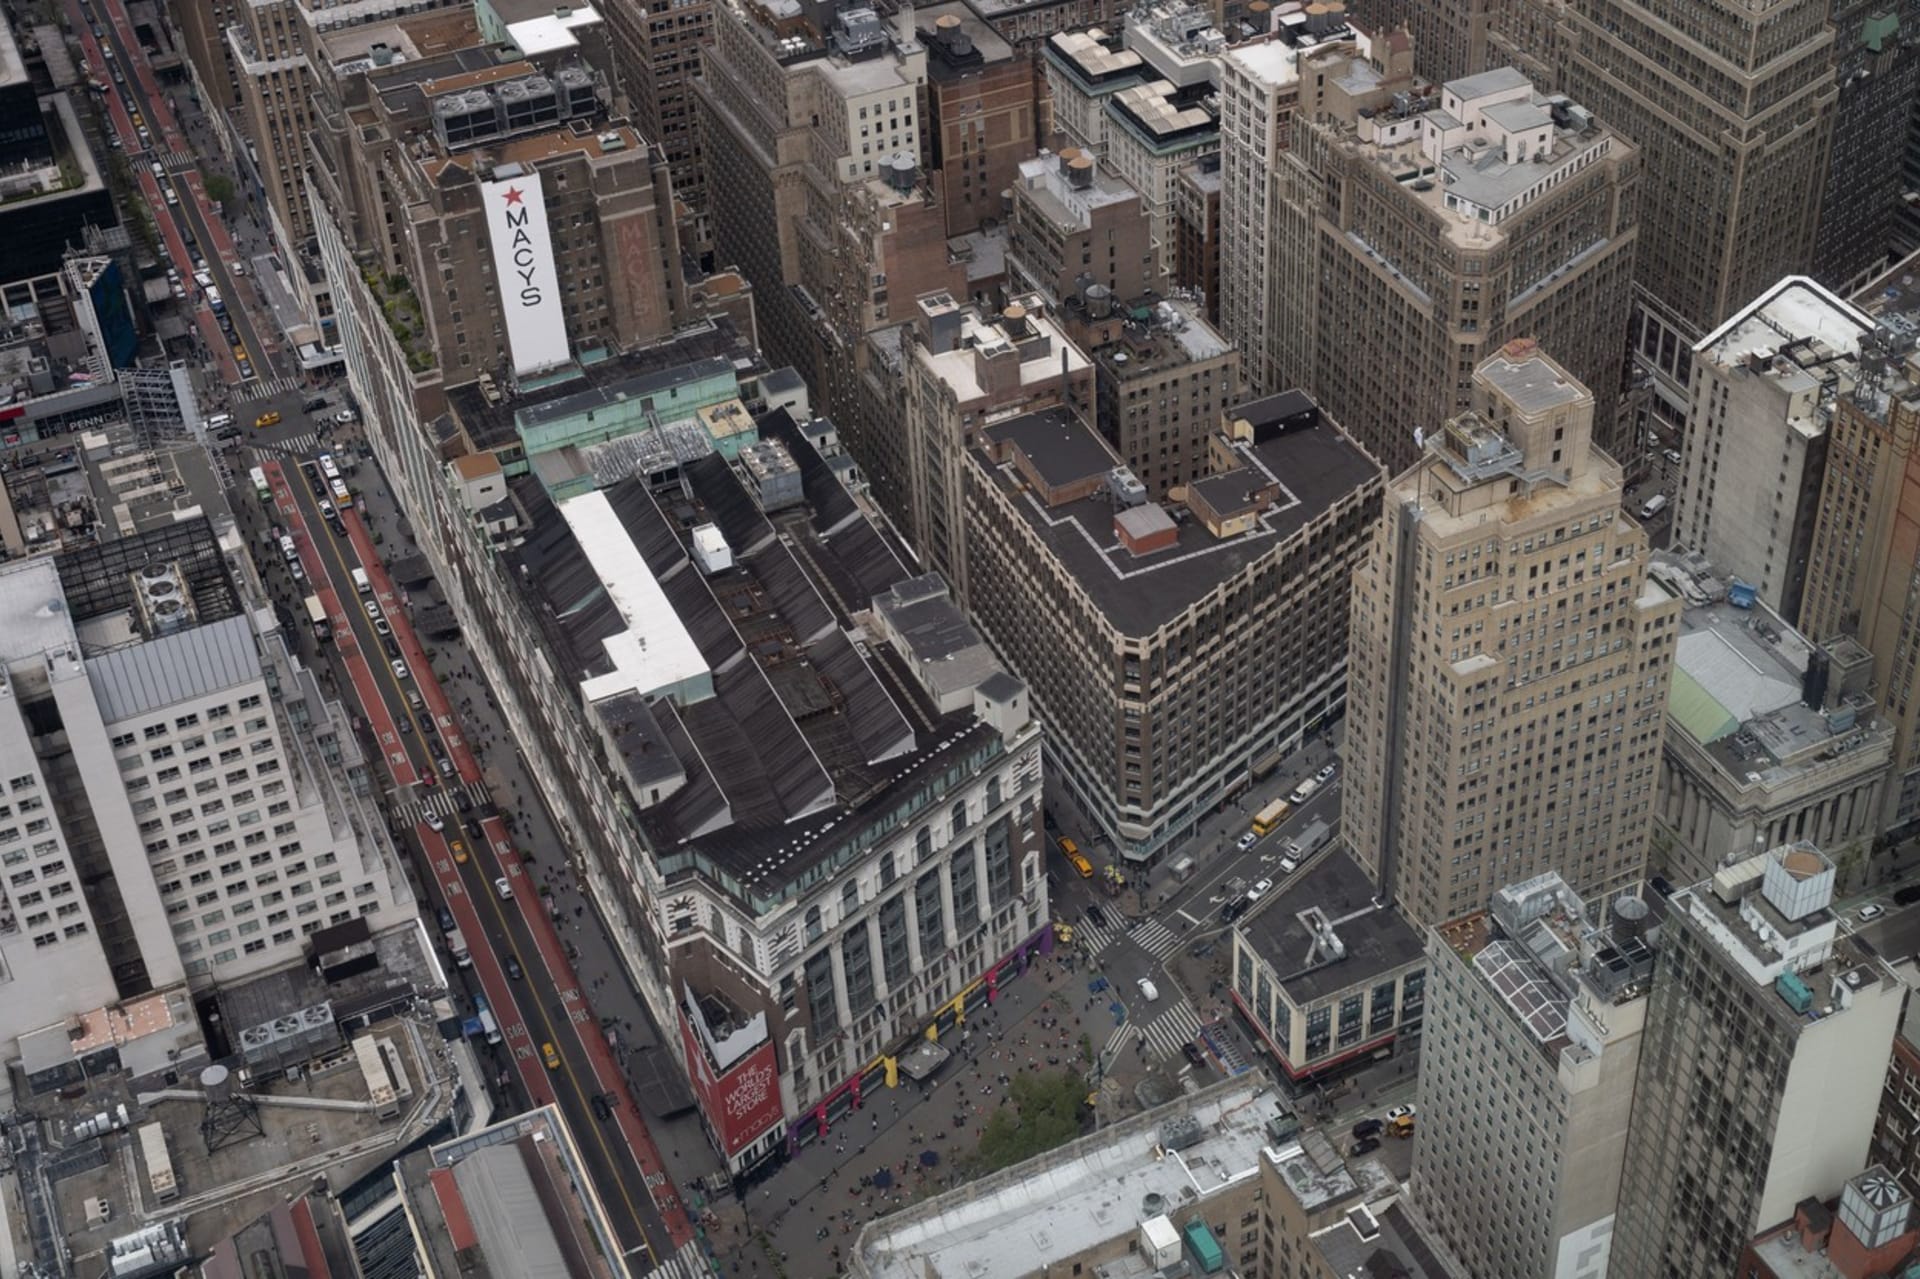 Výhled z Empire State Building